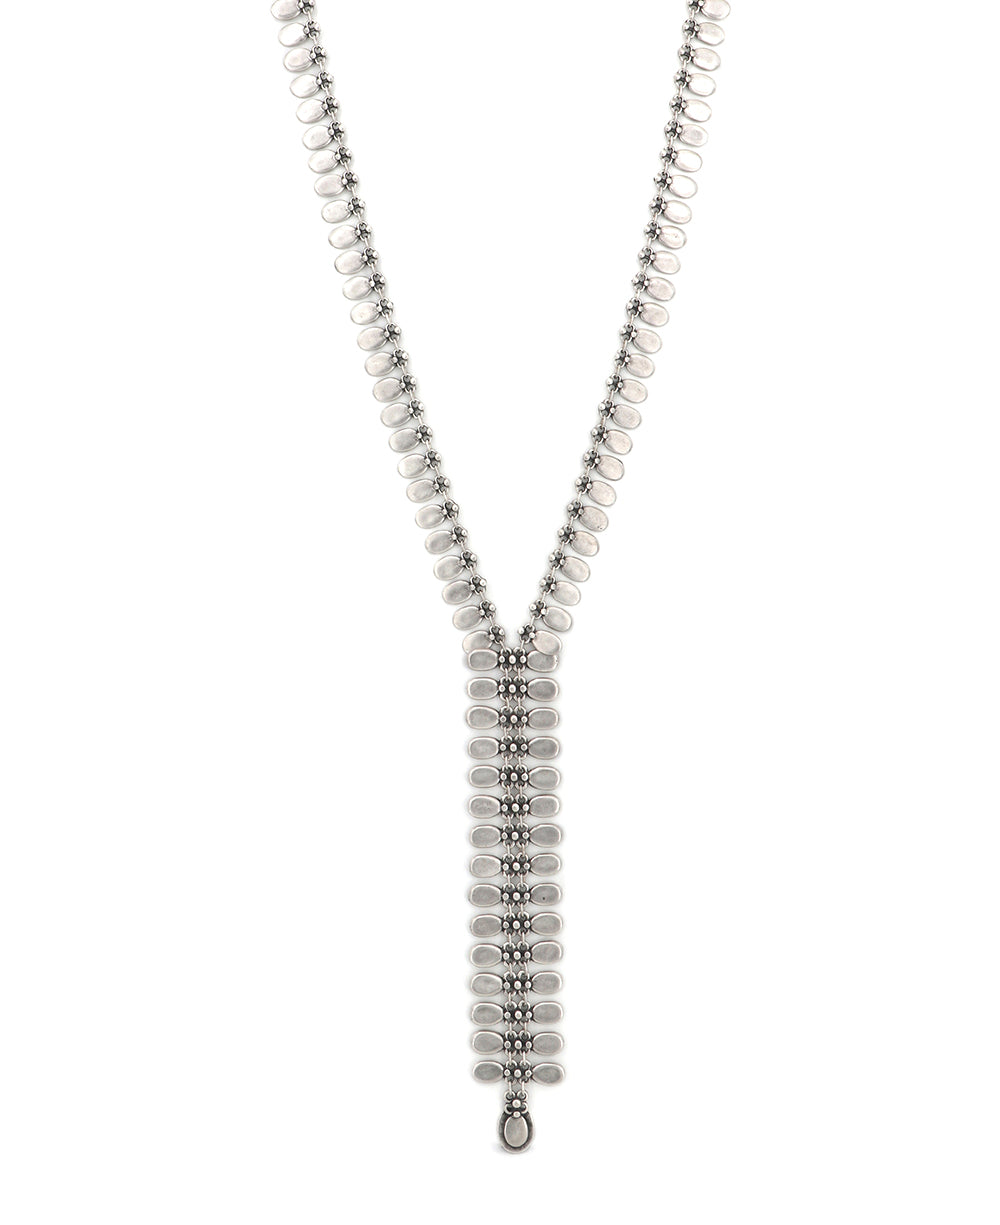 Minimalist metal statement necklace